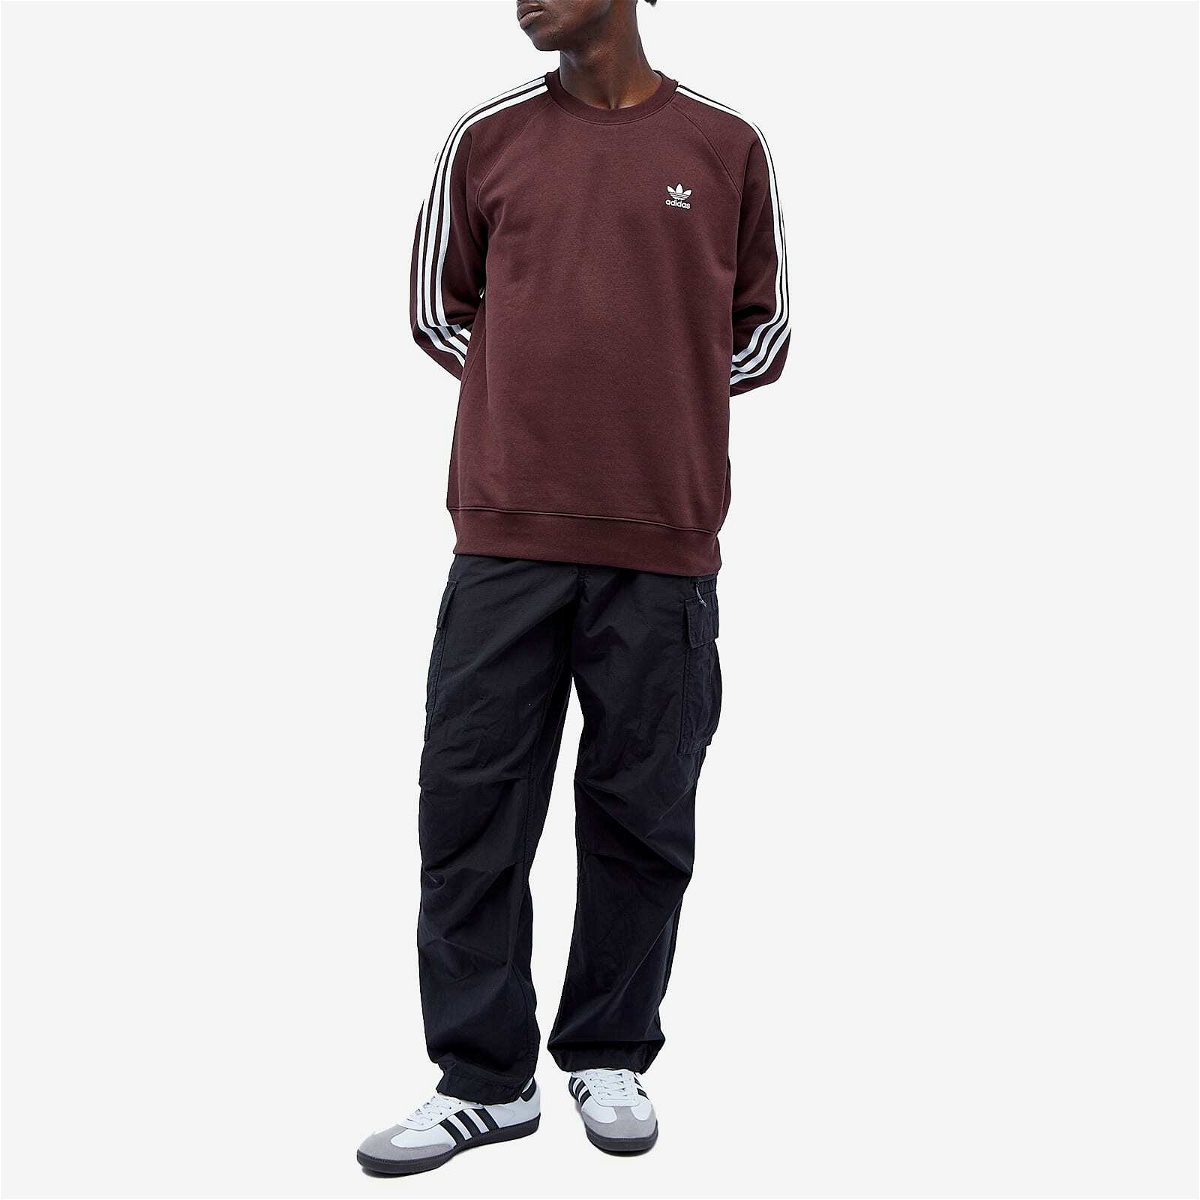 Adidas Men's 3 Stripe Crew Sweater in Shadow Brown adidas